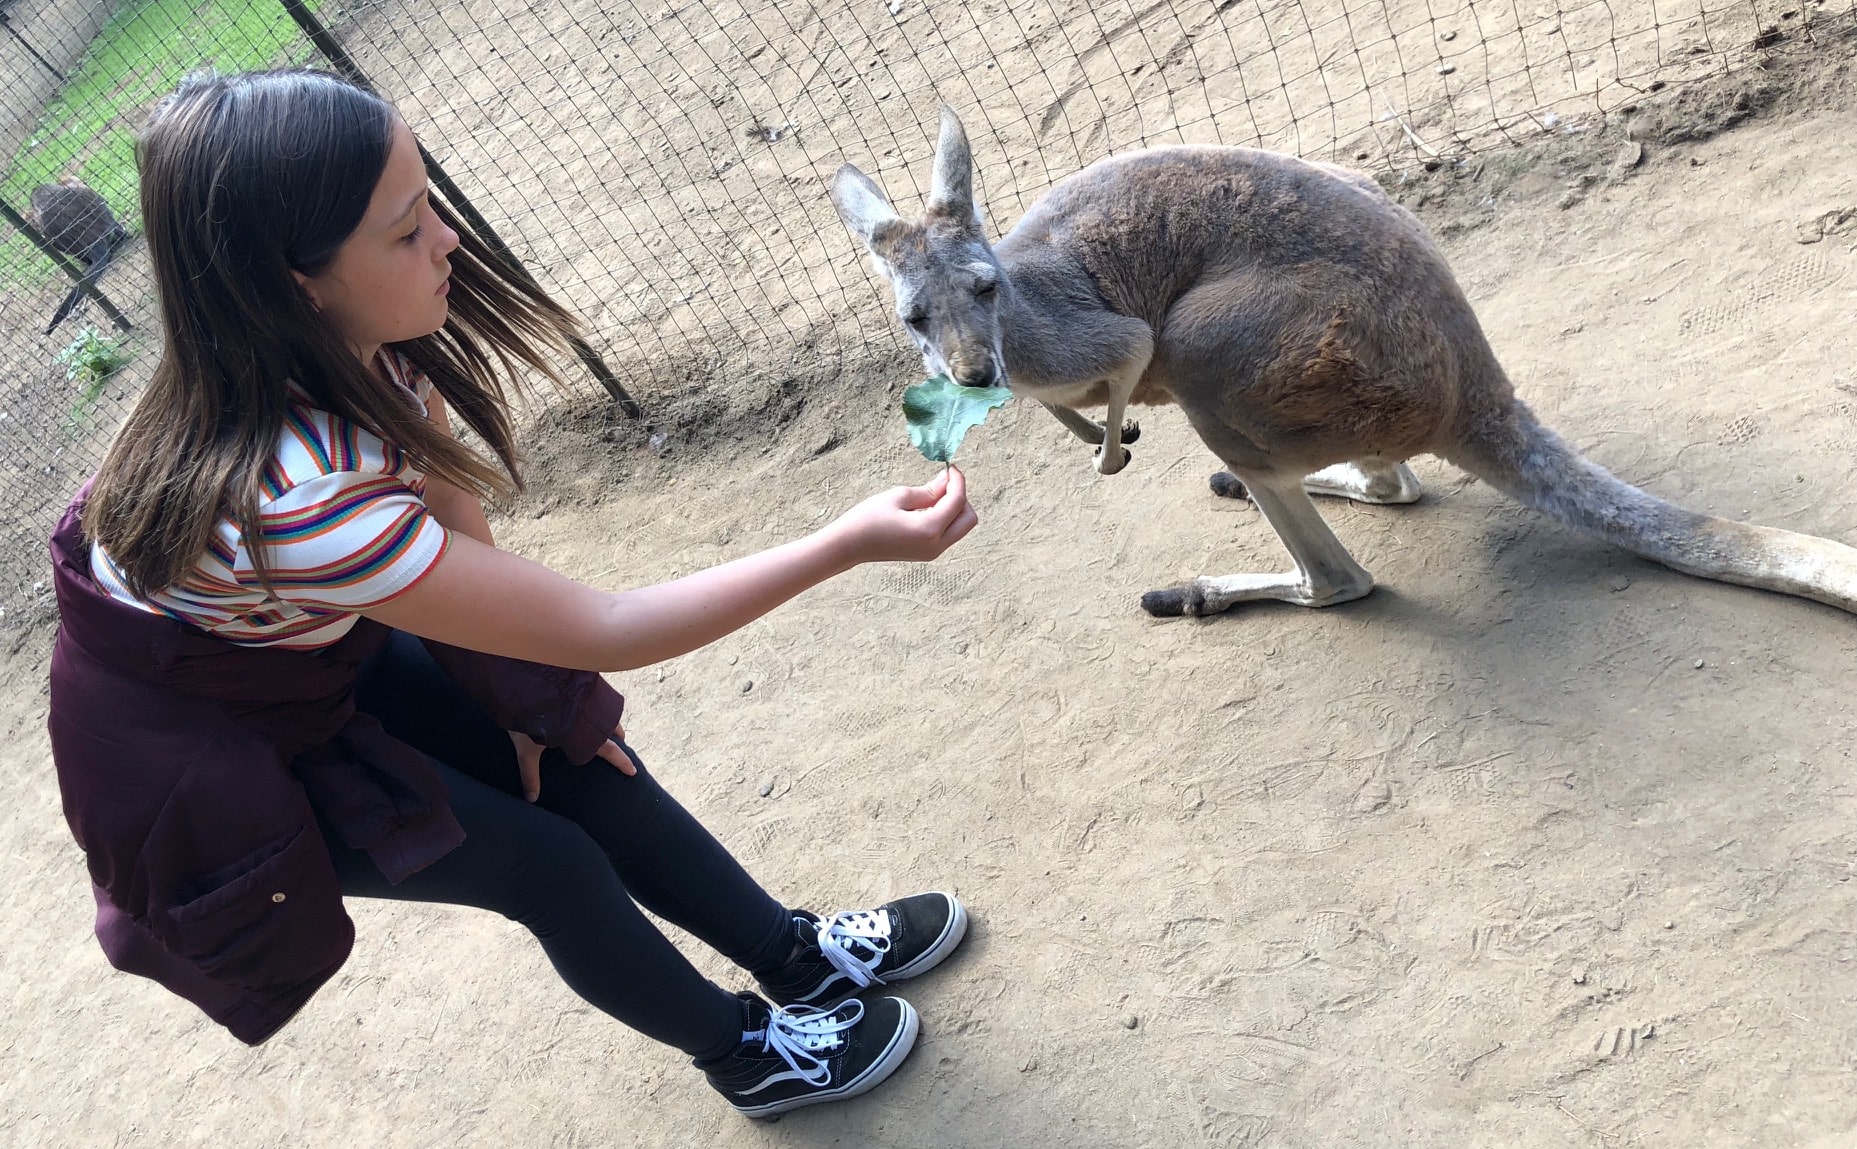 Kangaroo Farm